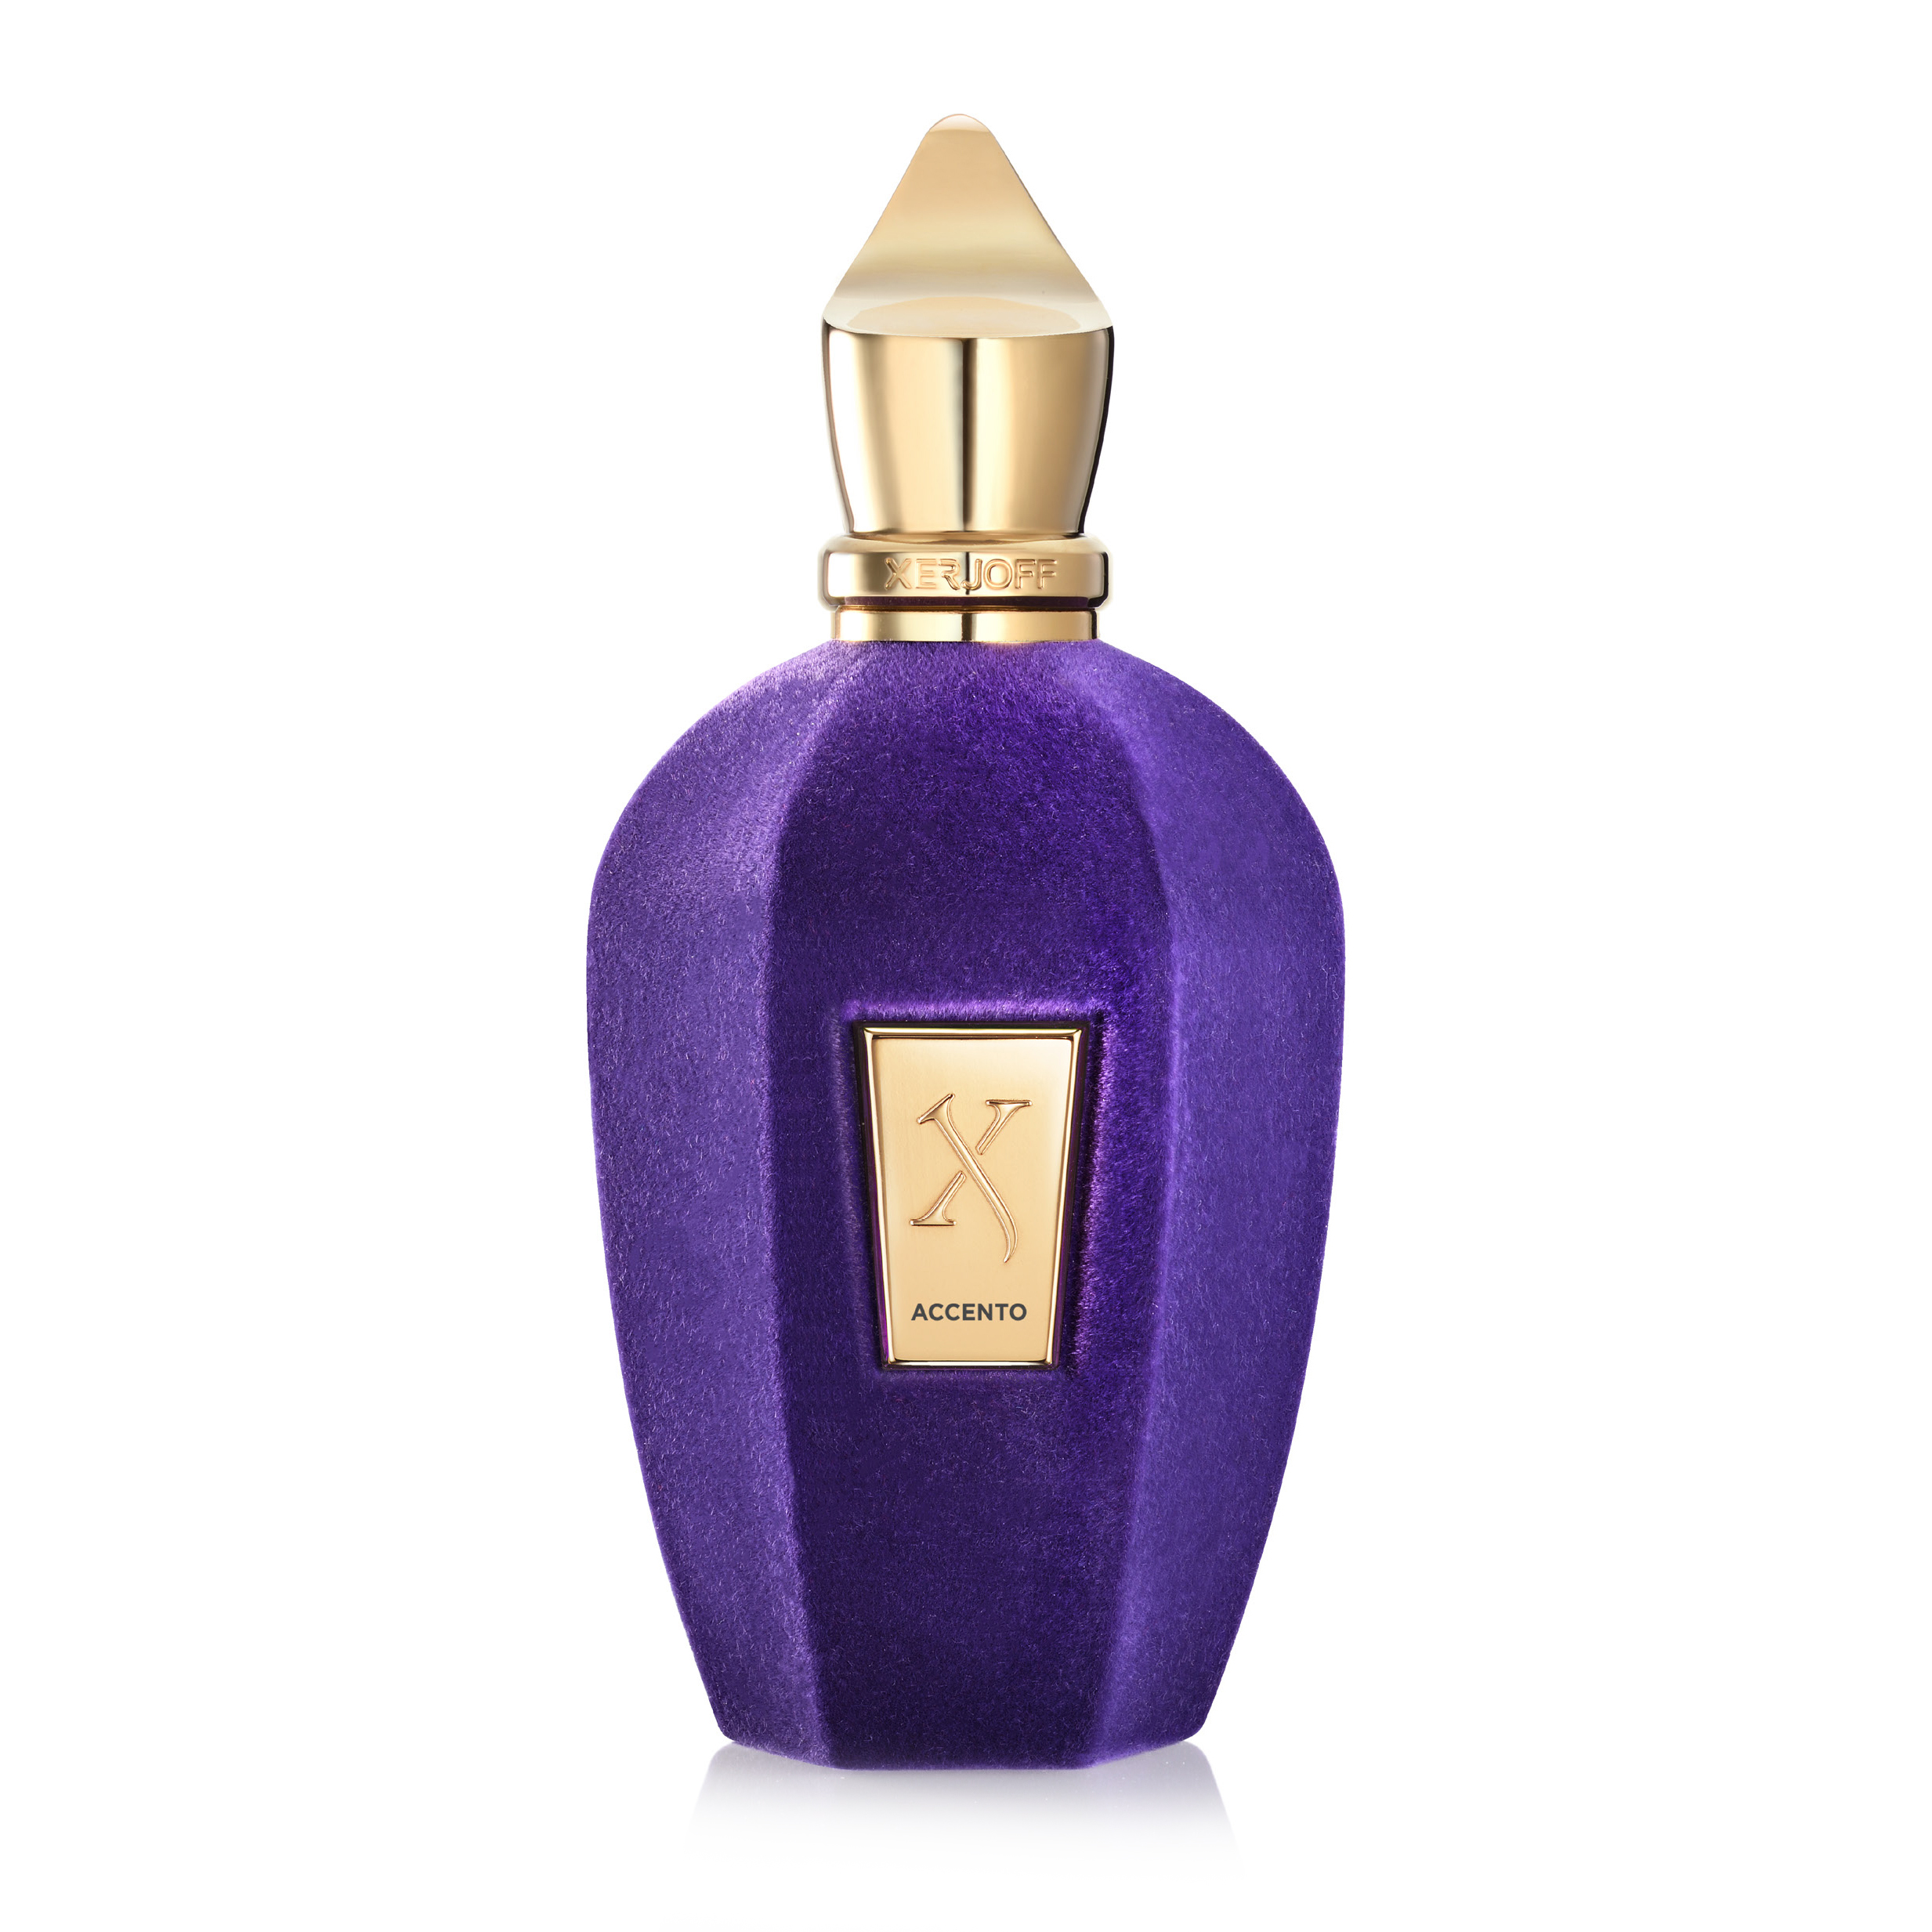 Accento Xerjoff perfume - a fragrance for women and men 2019